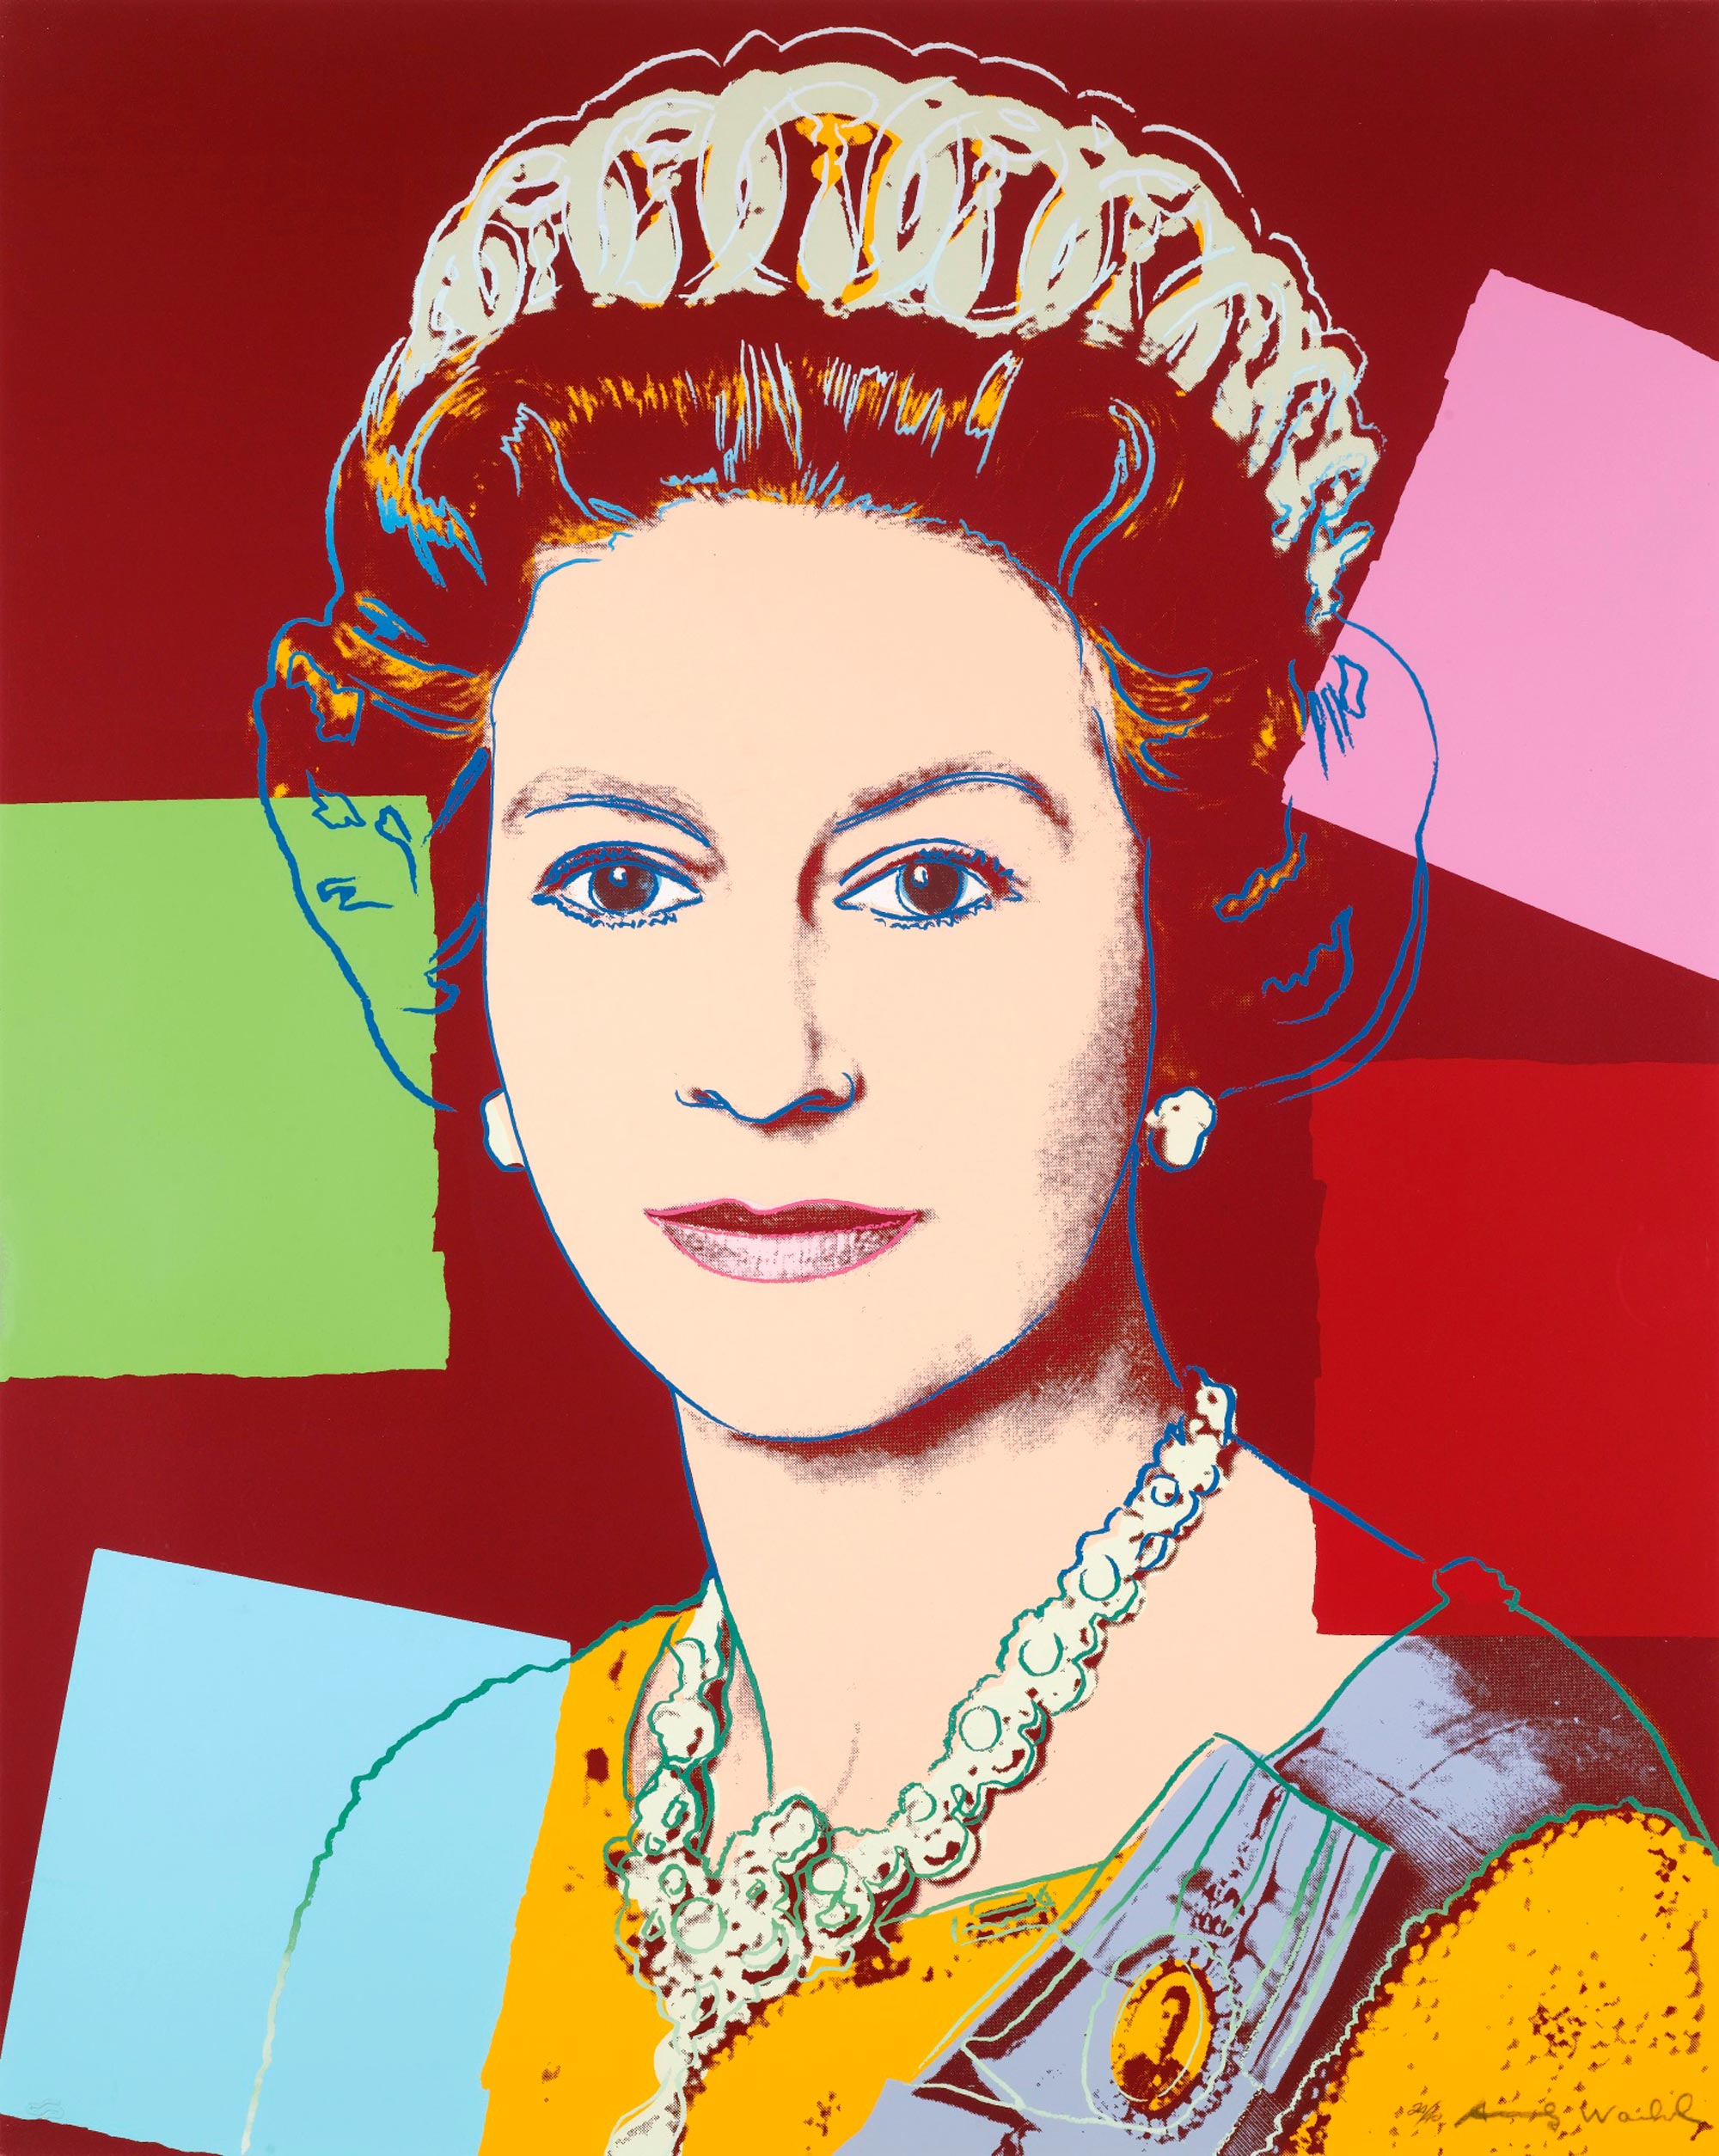 Andy Warhol pop art illustration of Queen Elizabeth